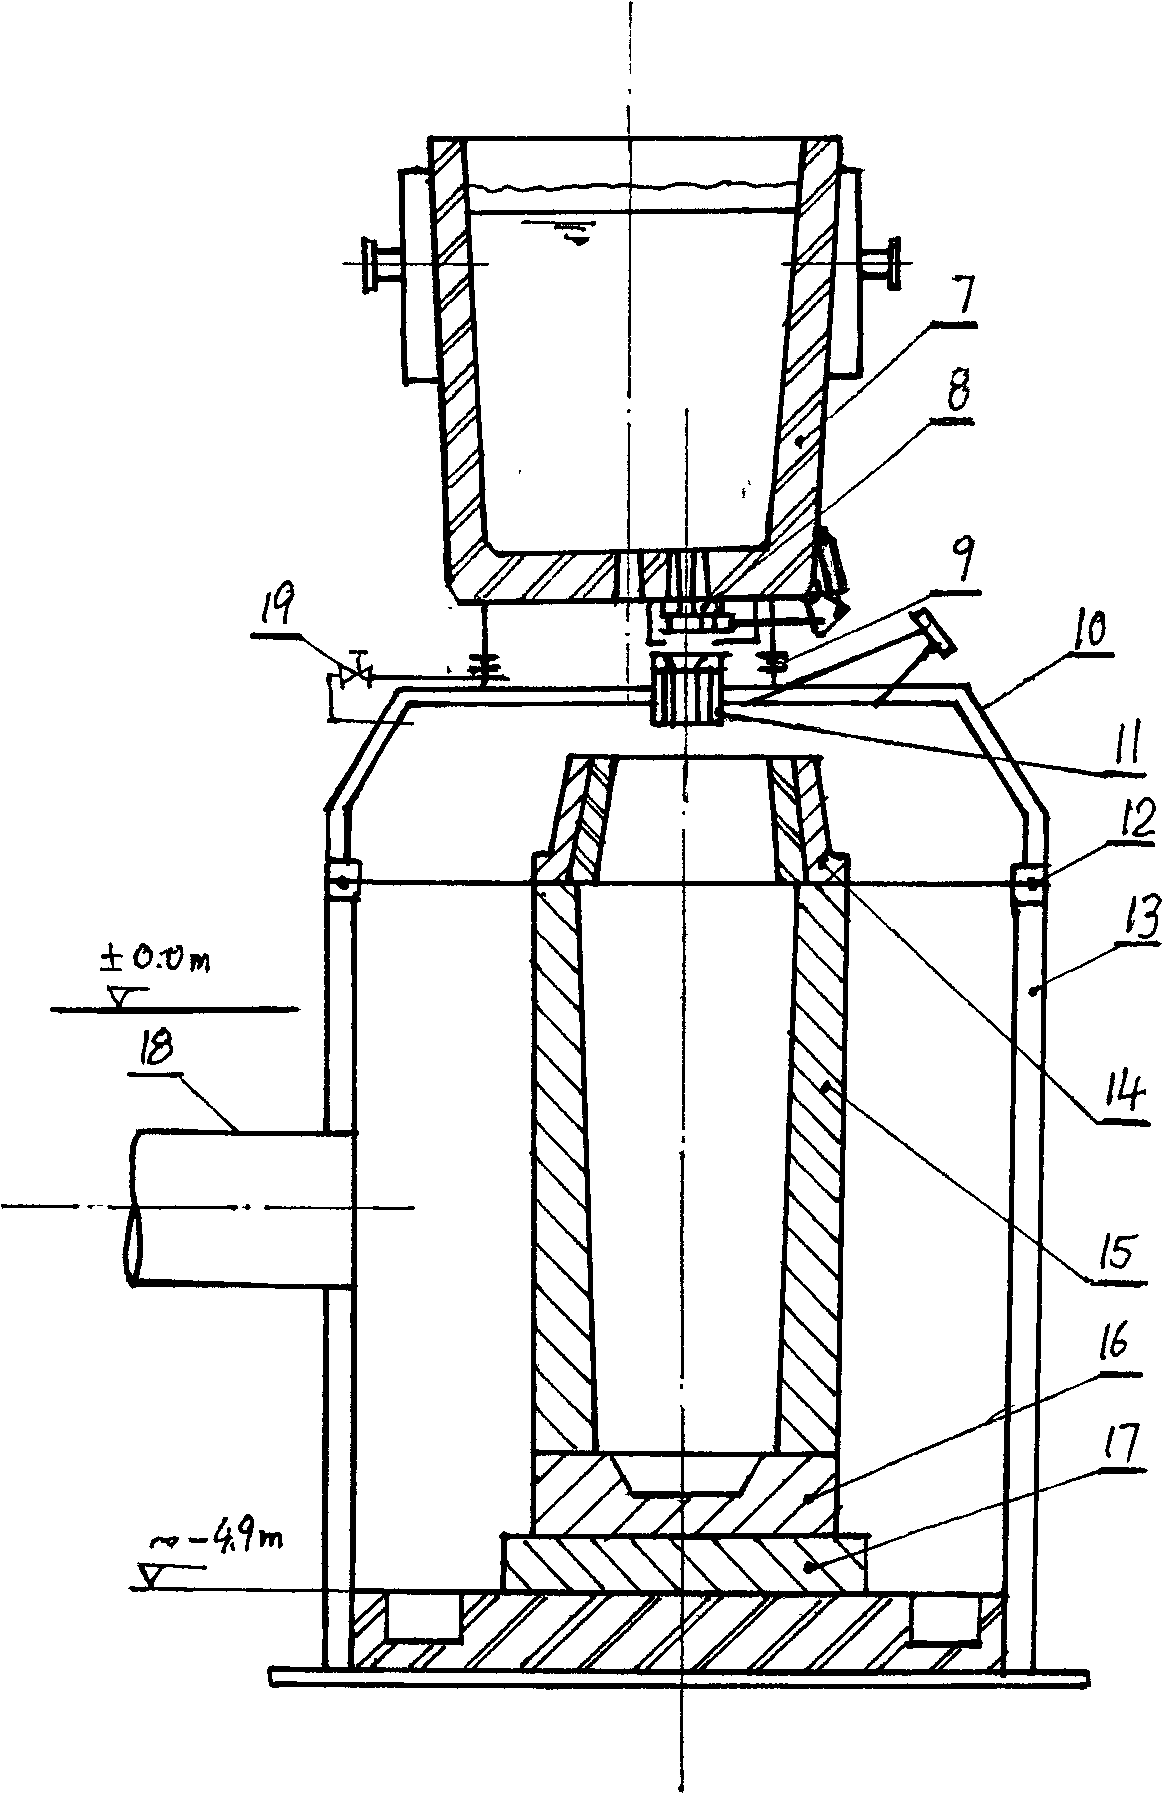 Equipment and technique for ladle-to-ladle, degasification and vacuum ingot casting of multiple-slide runner ladle